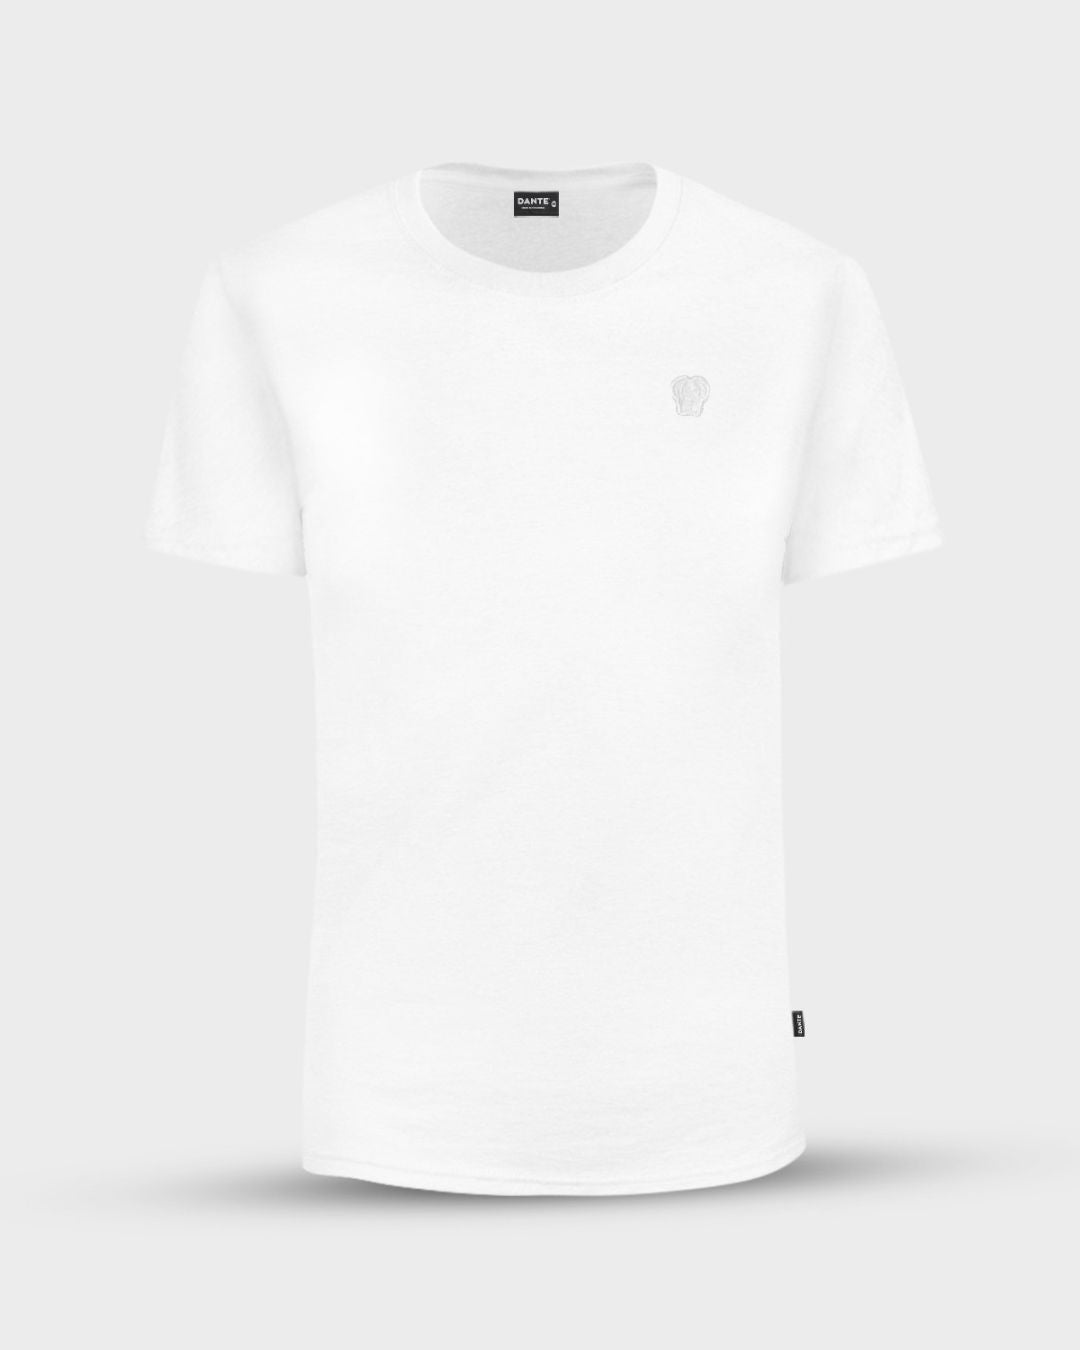 Camiseta Antimanchas Blanca logo Blanco - Mujer